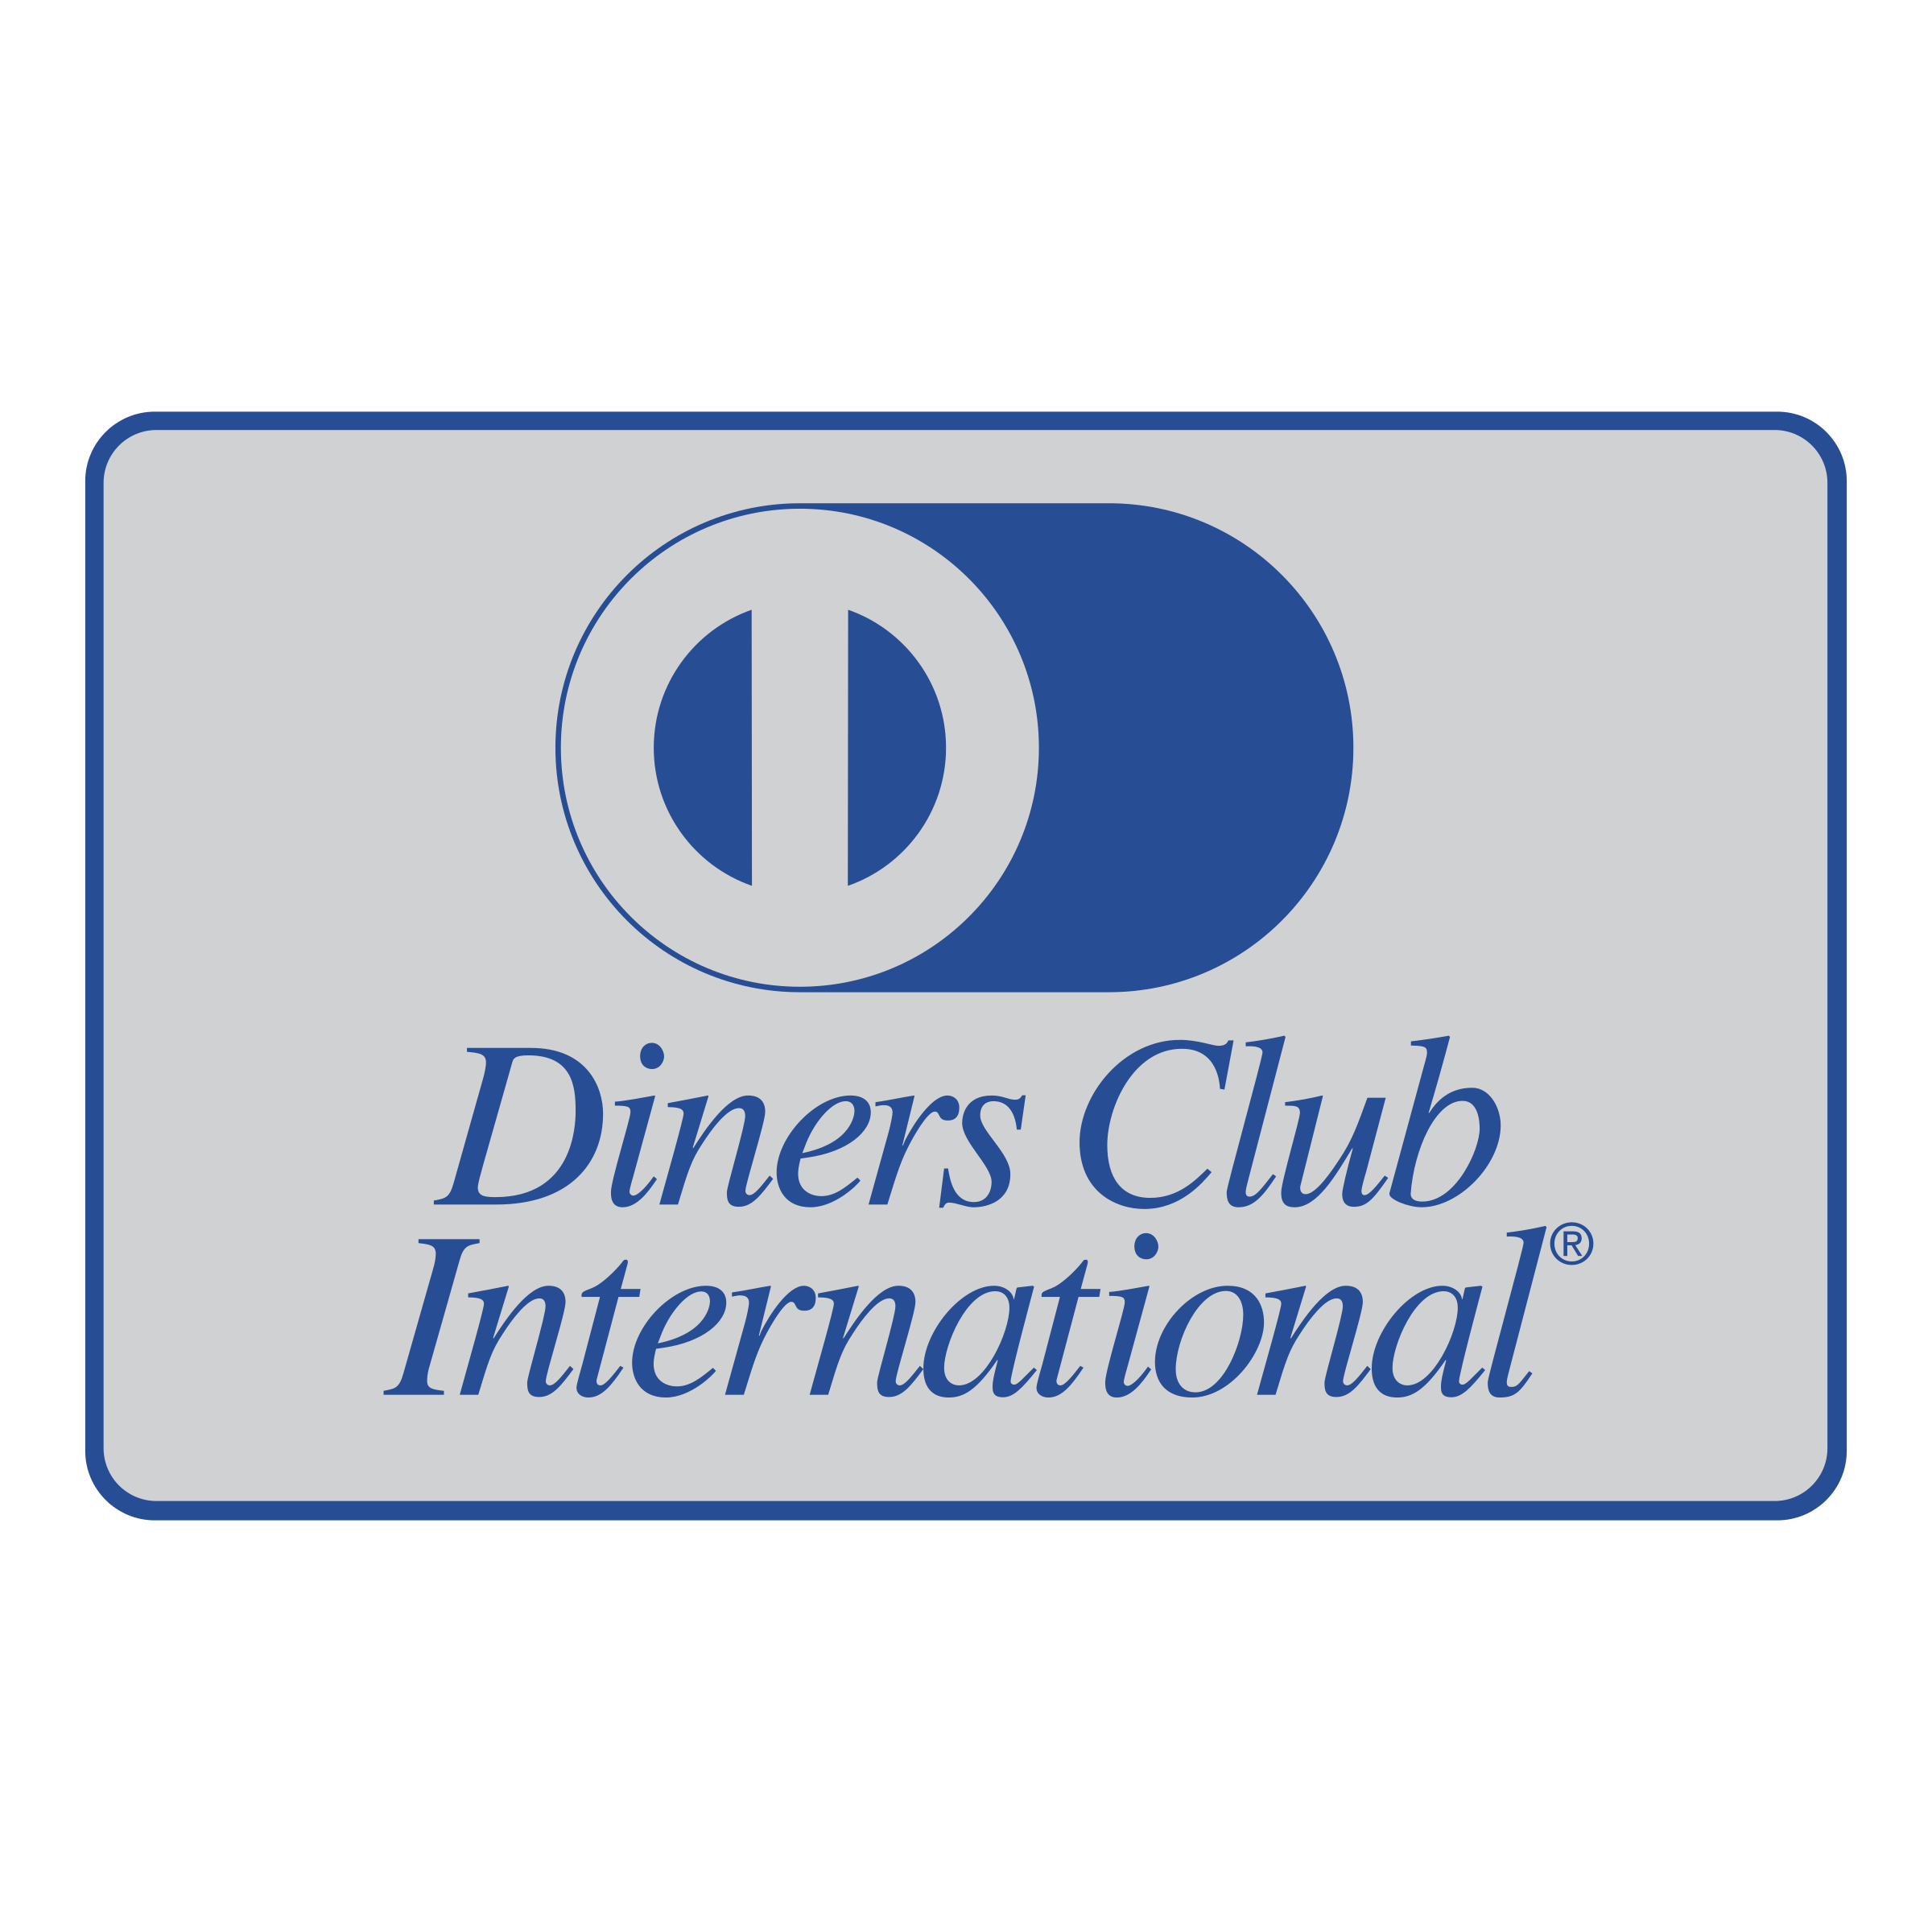 Diners Logo - Diners Club International Logo PNG Transparent & SVG Vector ...